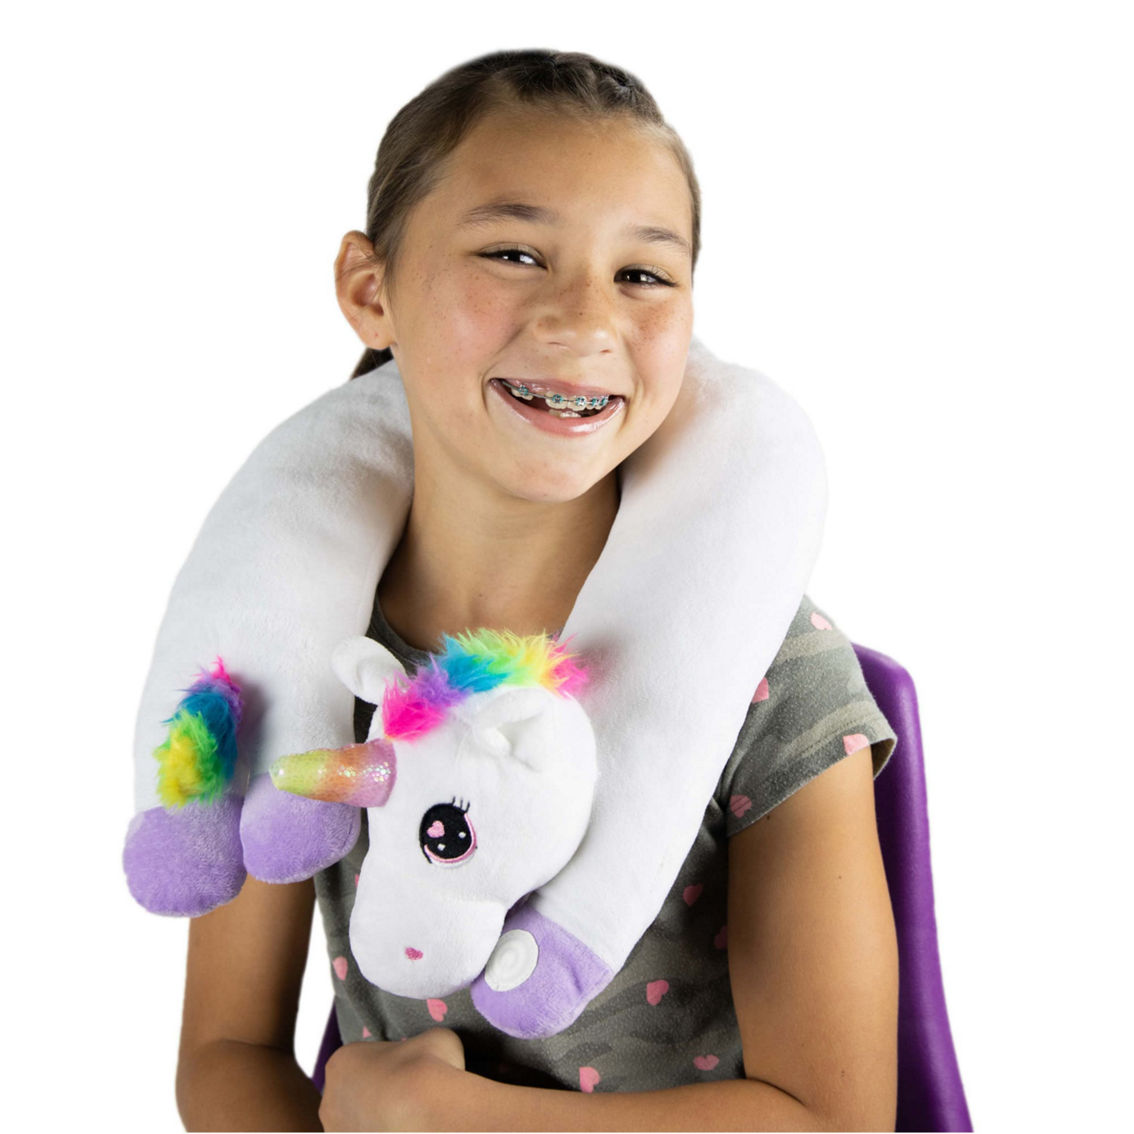 Bouncyband® Sensory Vibrating Neck Pillow - Unicorn - Image 3 of 5